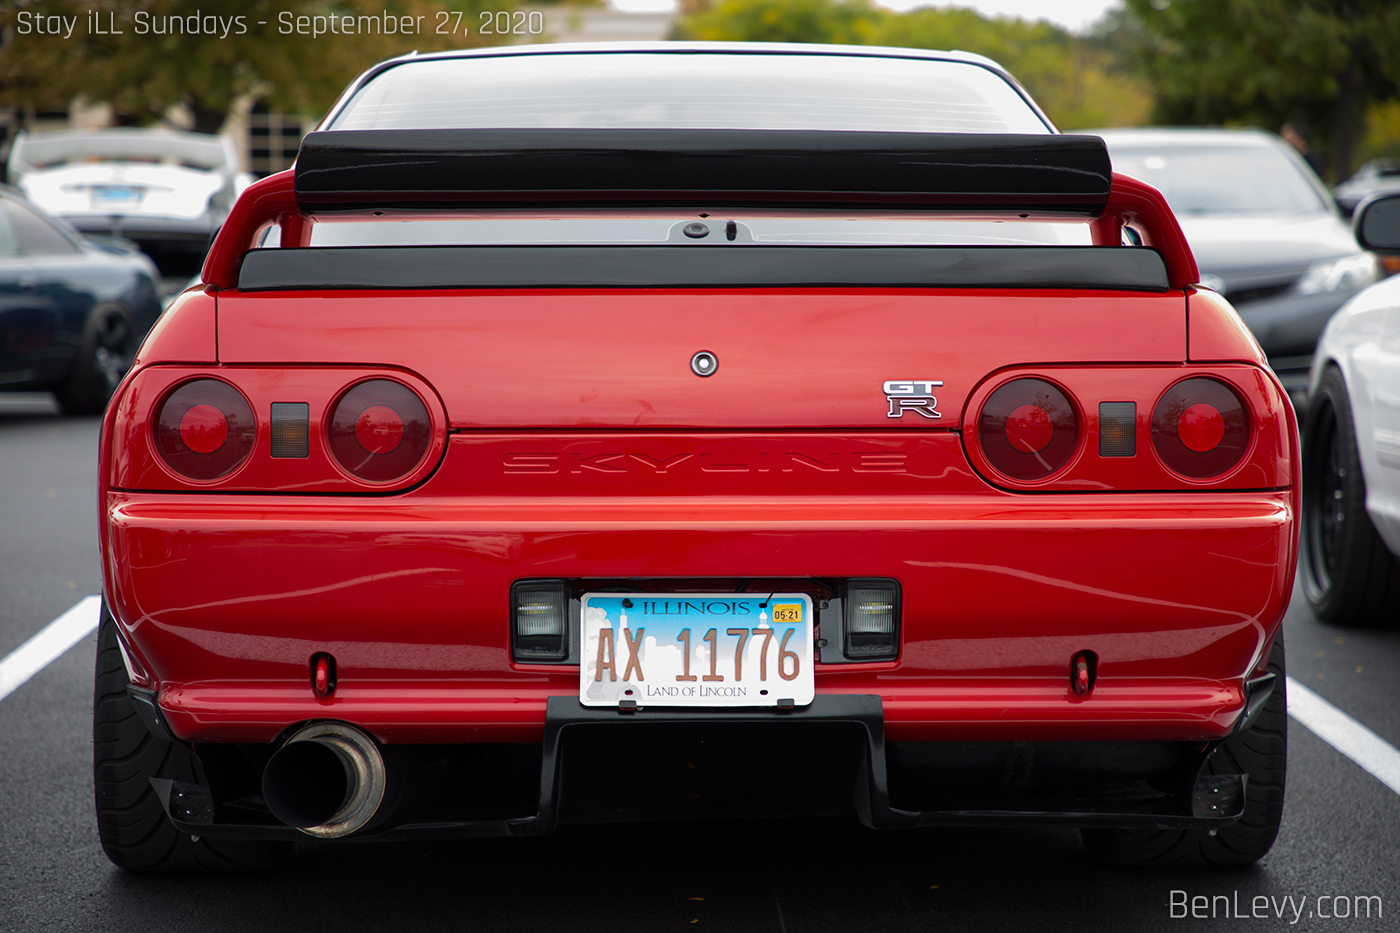 Rear of Red Nissan Skyline GT-R